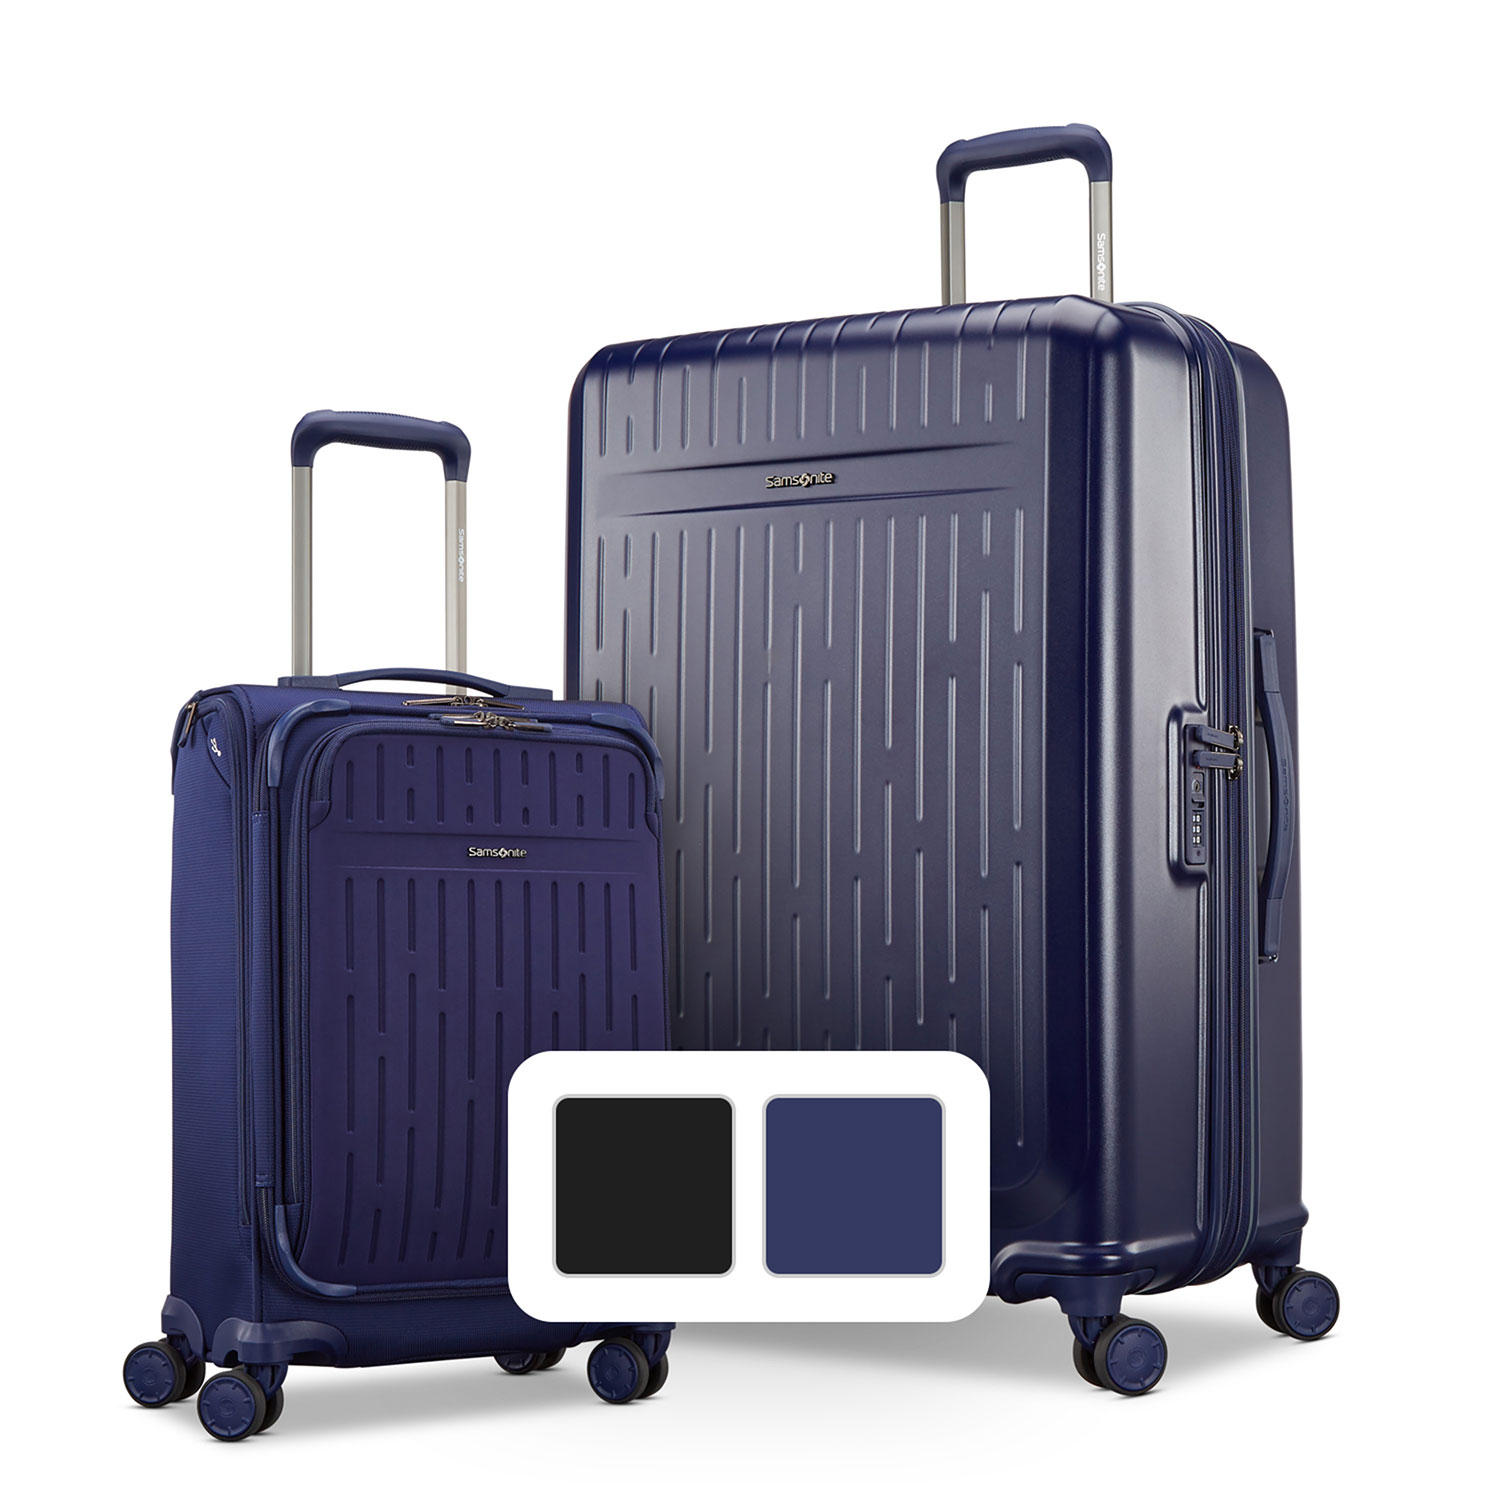 Samsonite Symmetry 2pc Hybrid Luggage Set -Blue